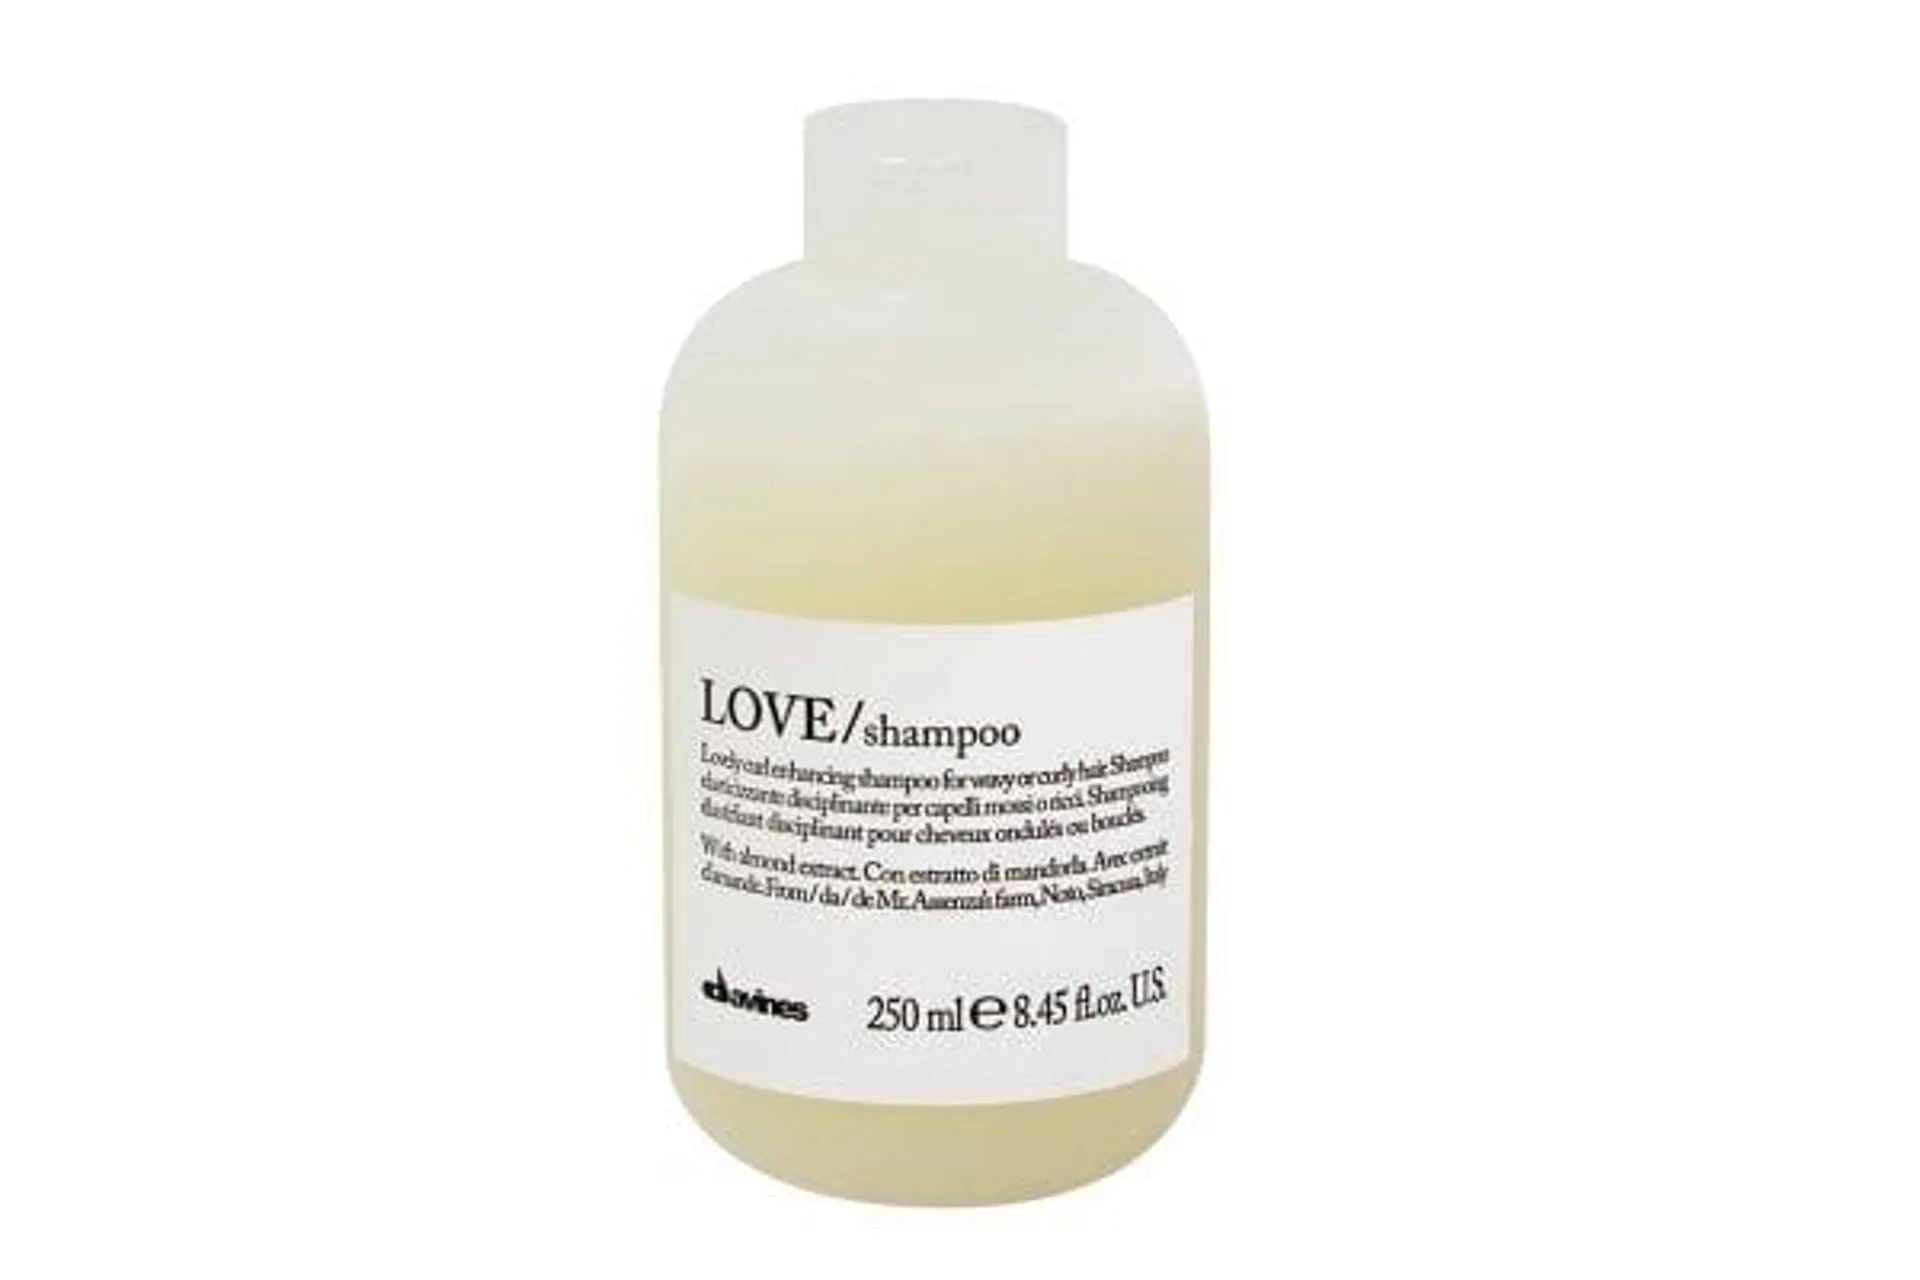 Davines Love Curl Shampoo 250ml